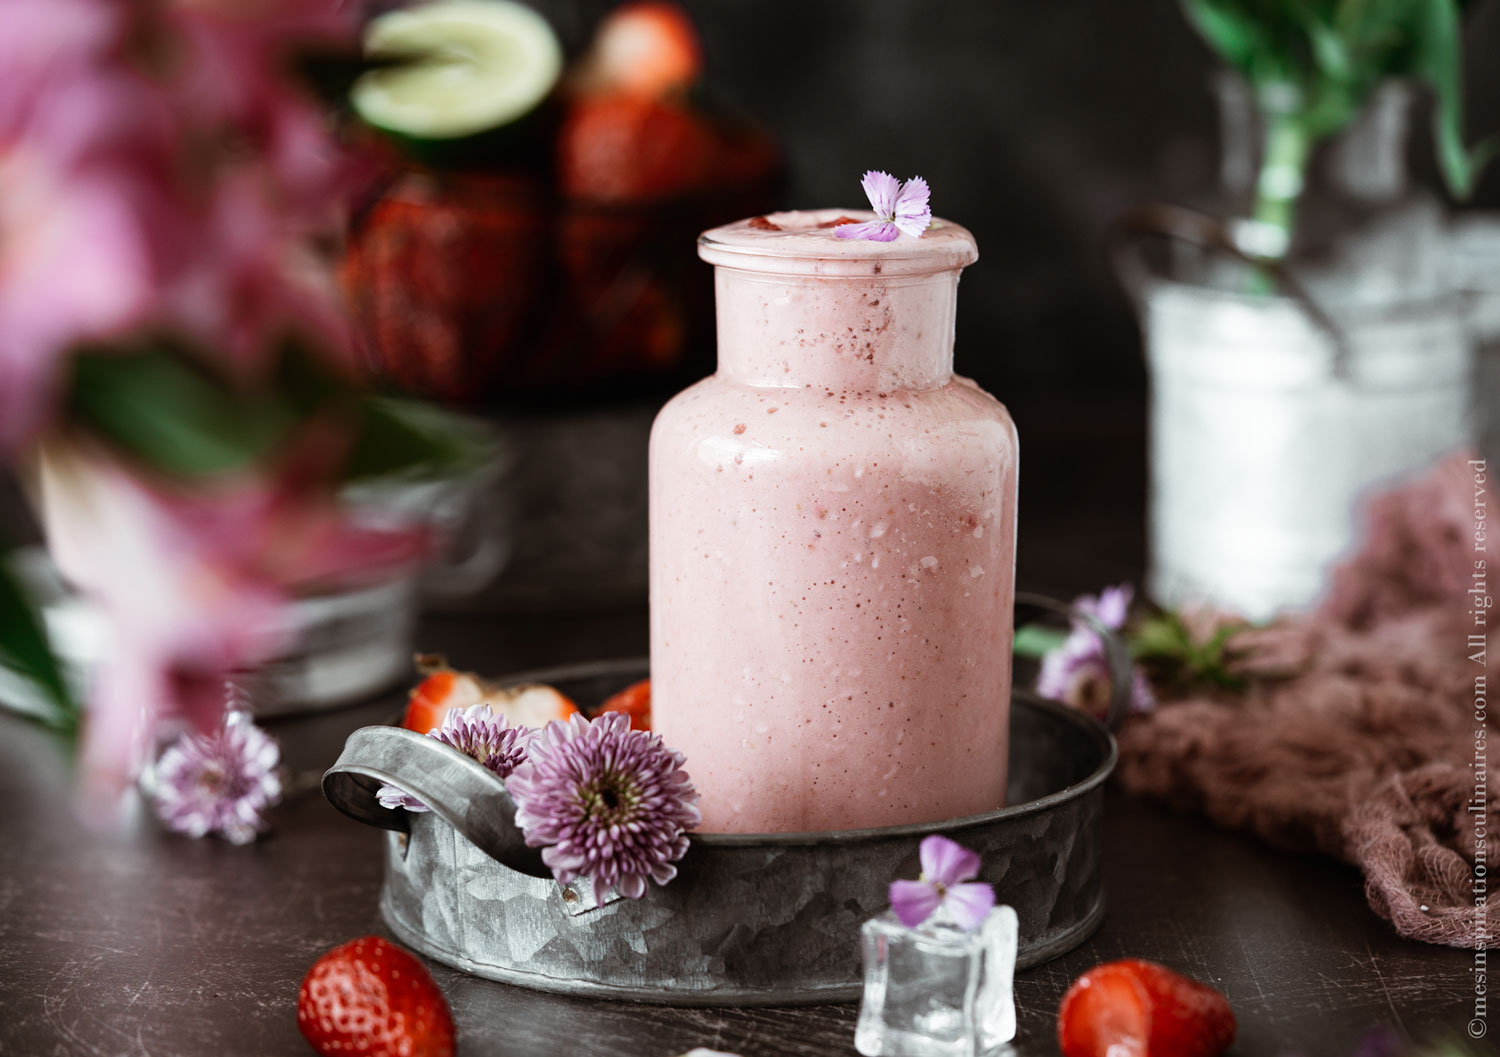 Smoothie fraises rhubarbe, recette facile